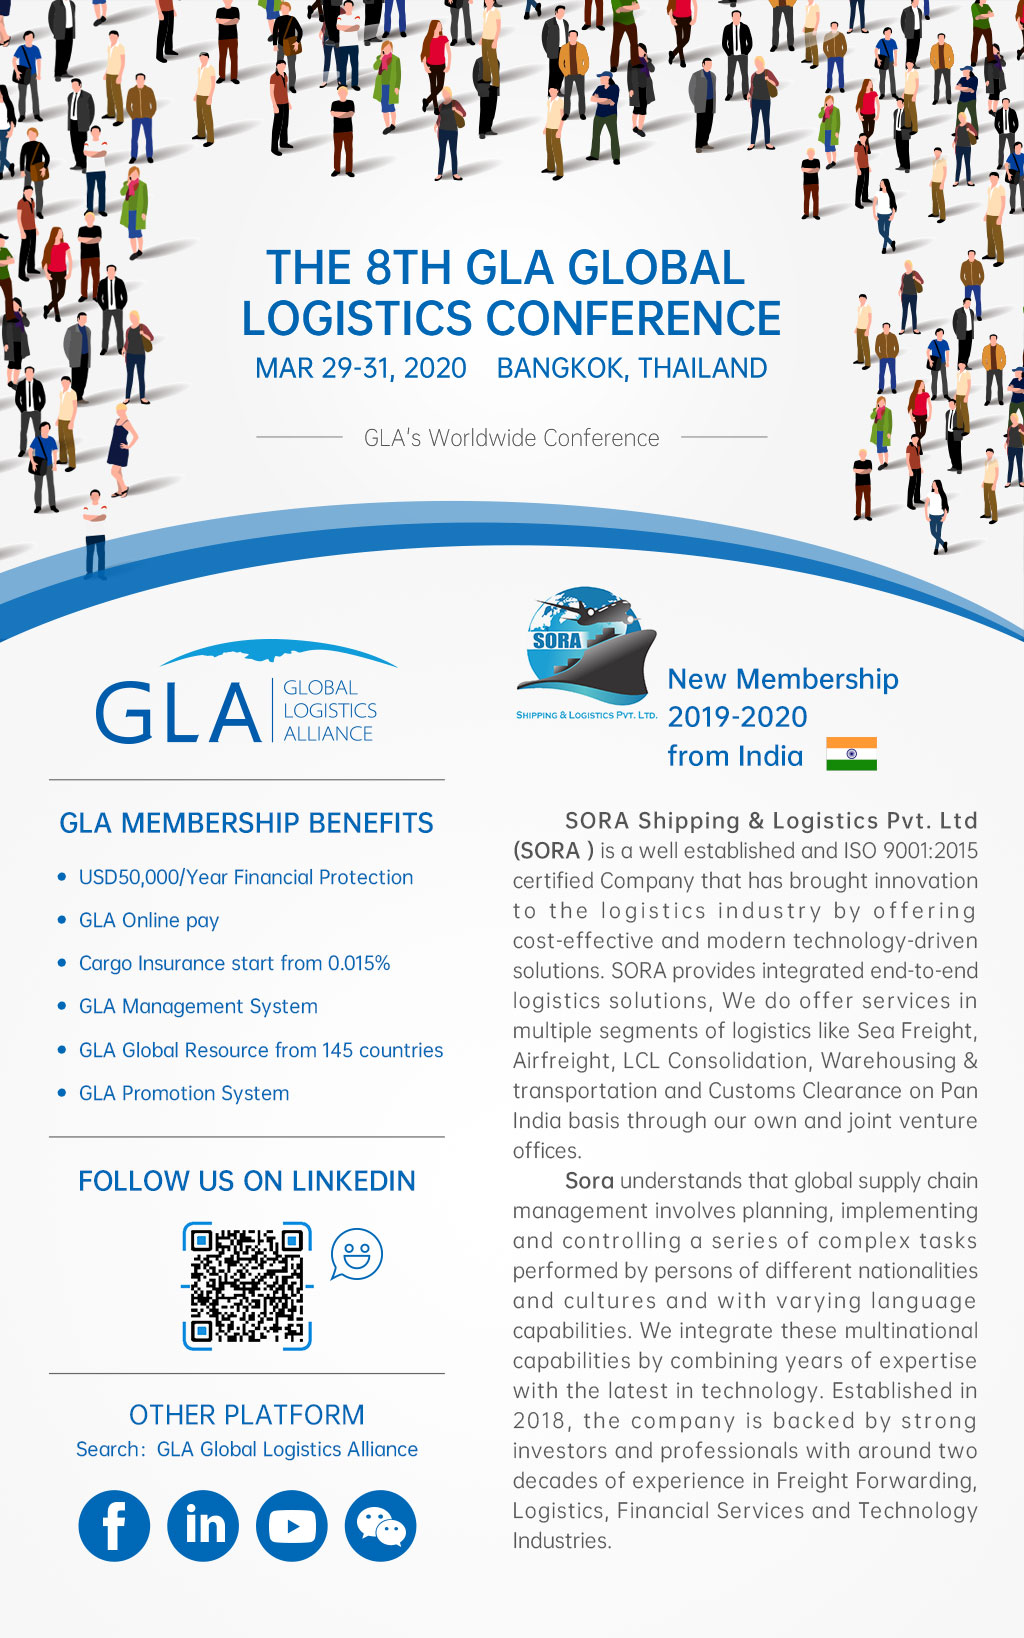 GLA New Membership — SORA SHIPPING & LOGISTICS from India